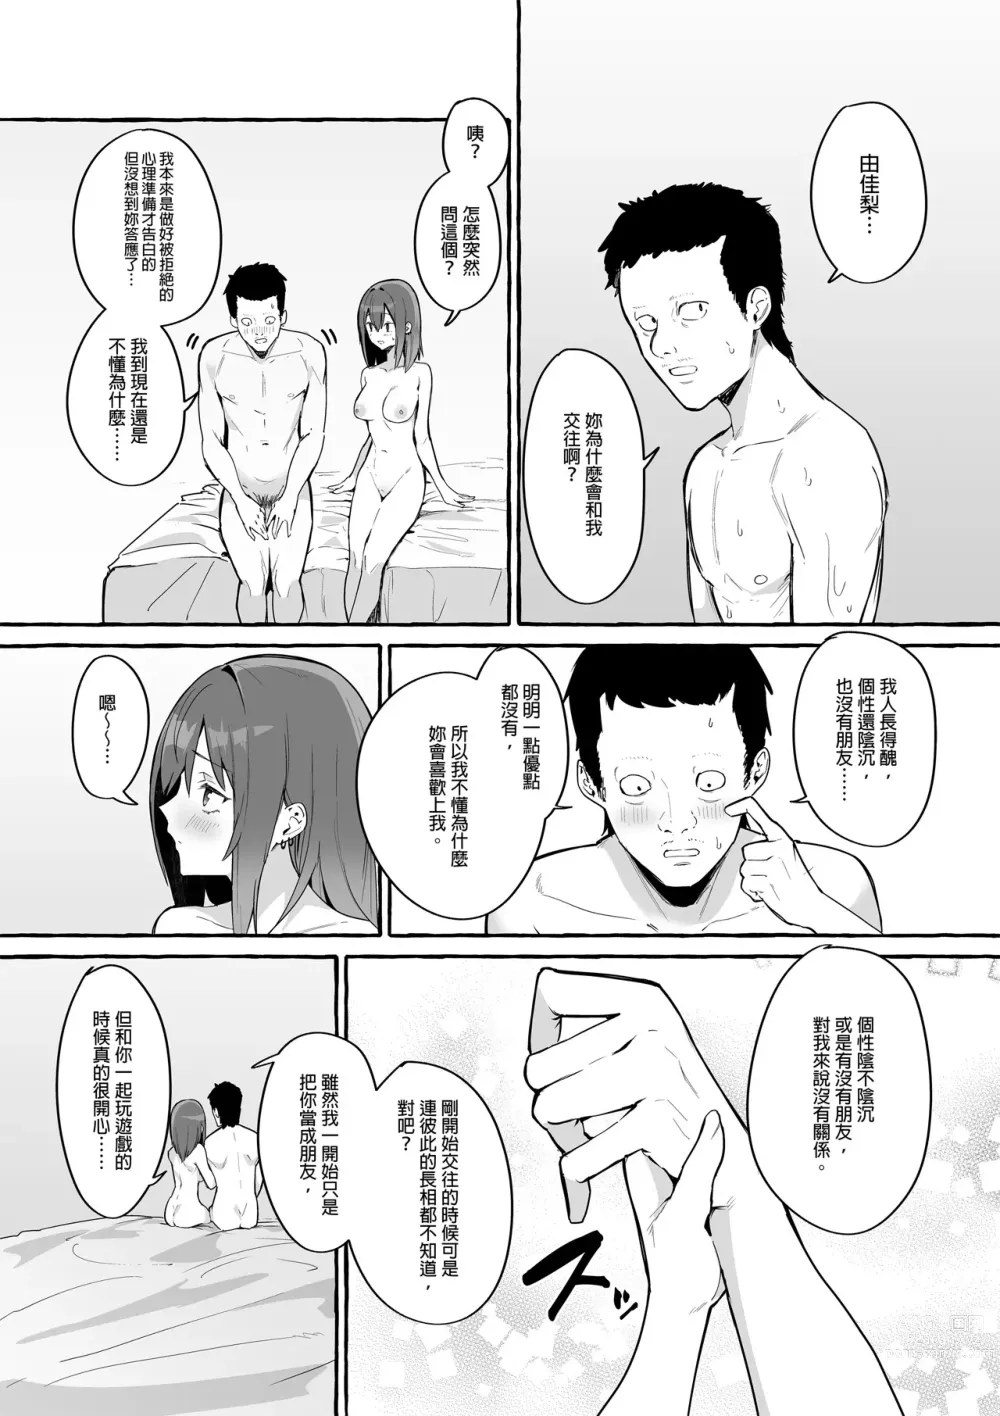 Page 38 of doujinshi ネットで出会った巨乳彼女と会ったら搾り取られまくった話。